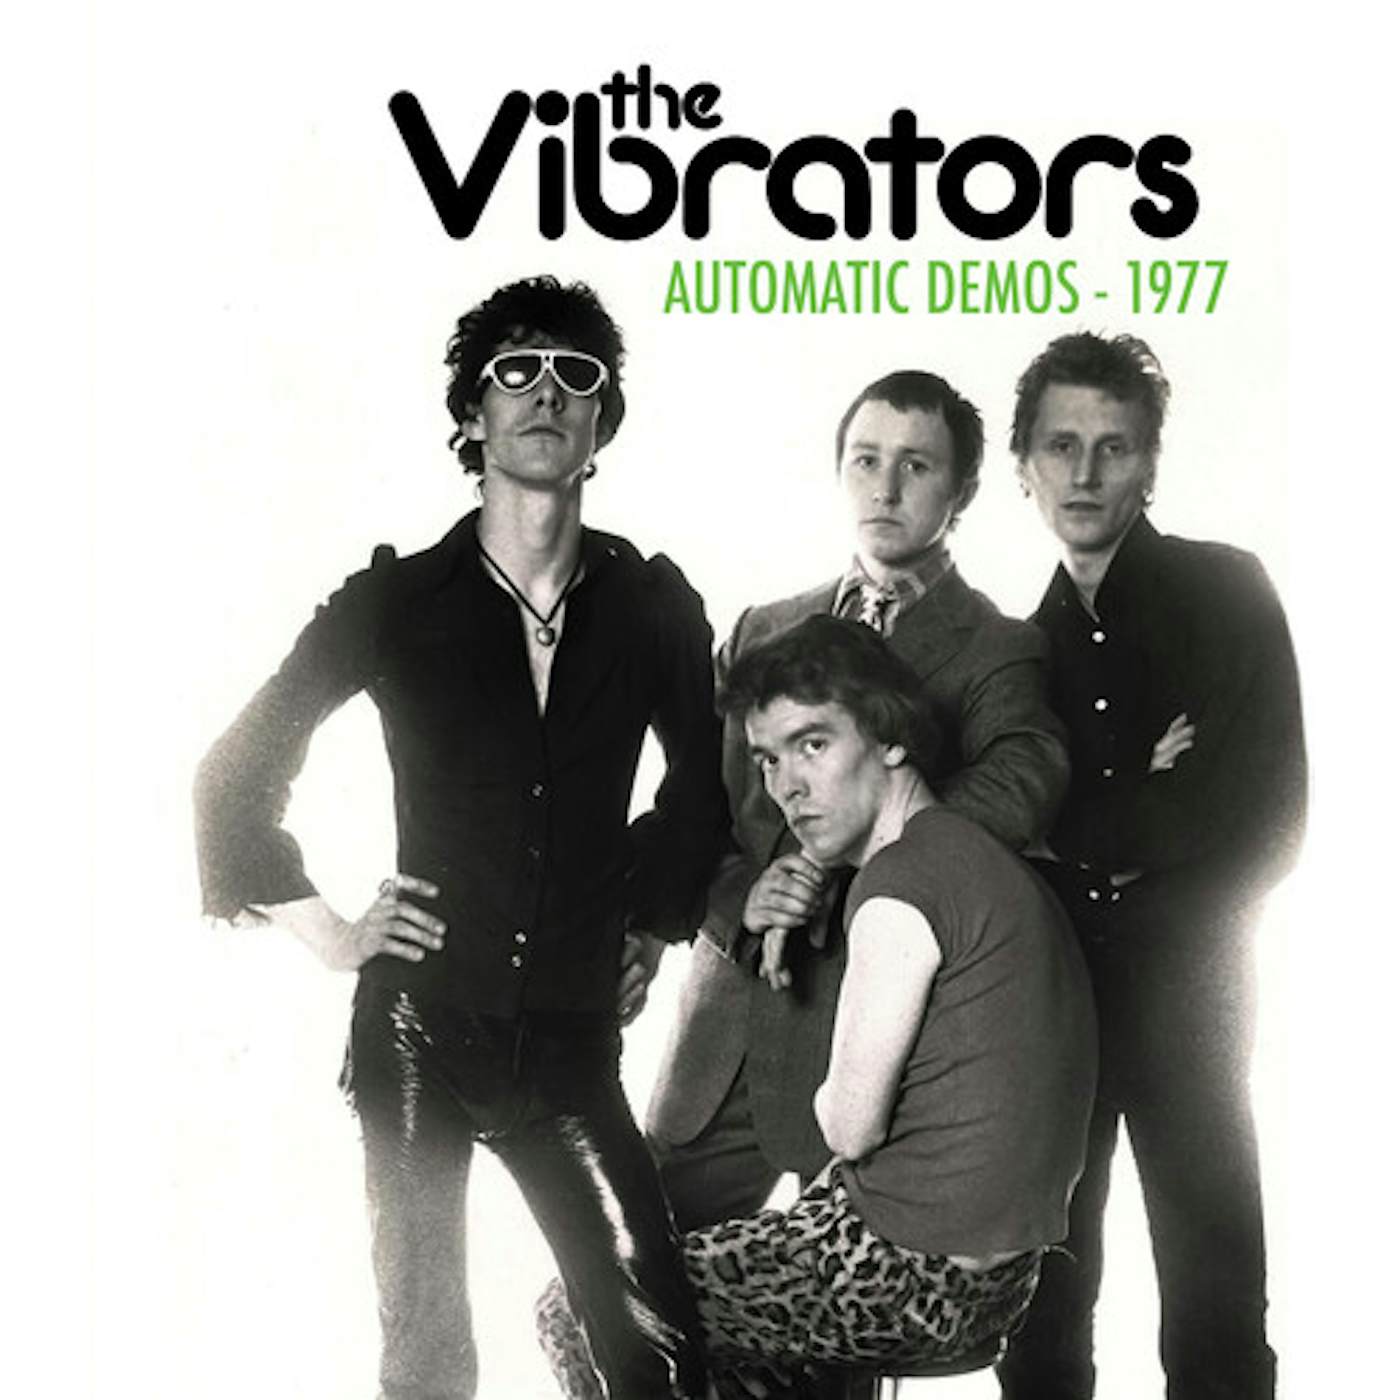 The Vibrators AUTOMATIC DEMOS 1977 - GREEN MARBLE Vinyl Record